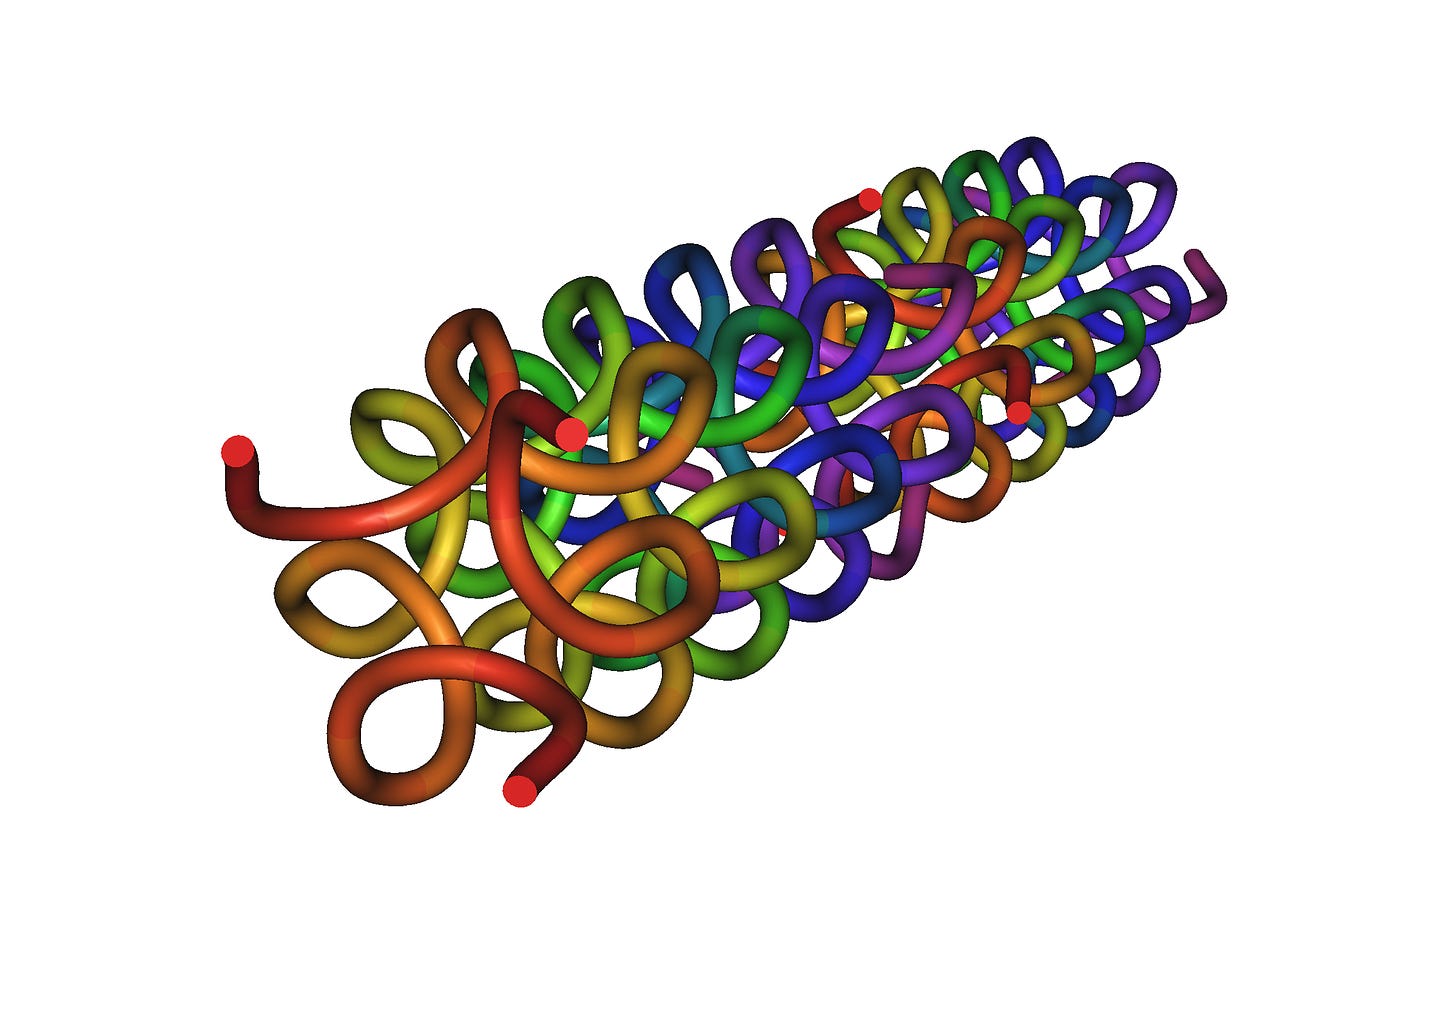 Collagen helix - Wikipedia